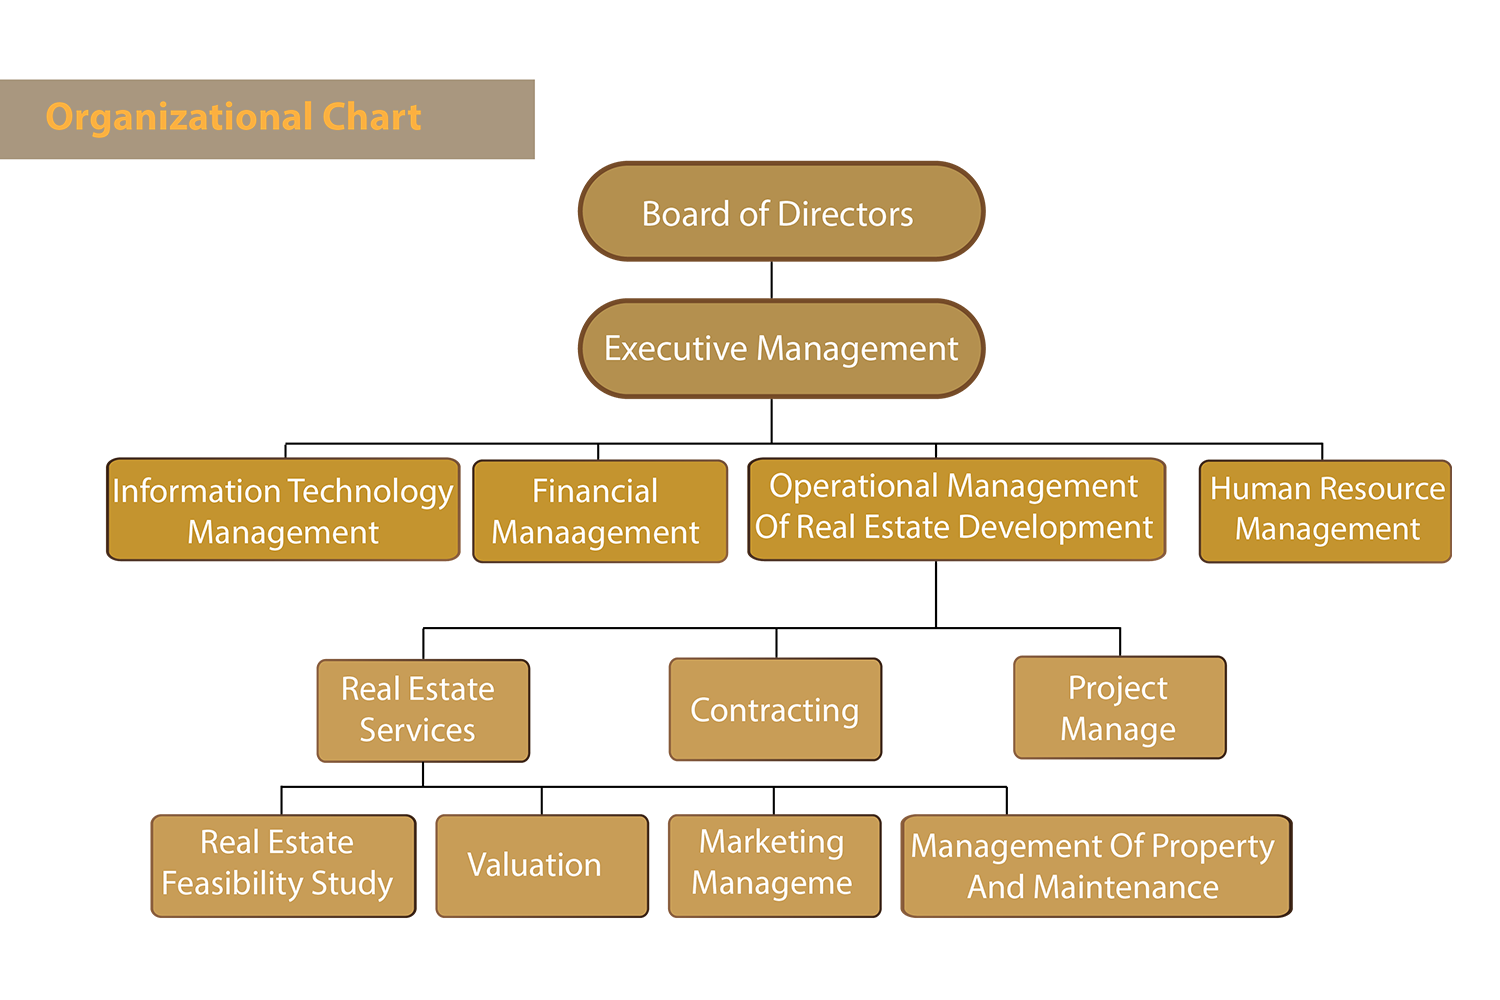 Real Estate Company Organizational Chart